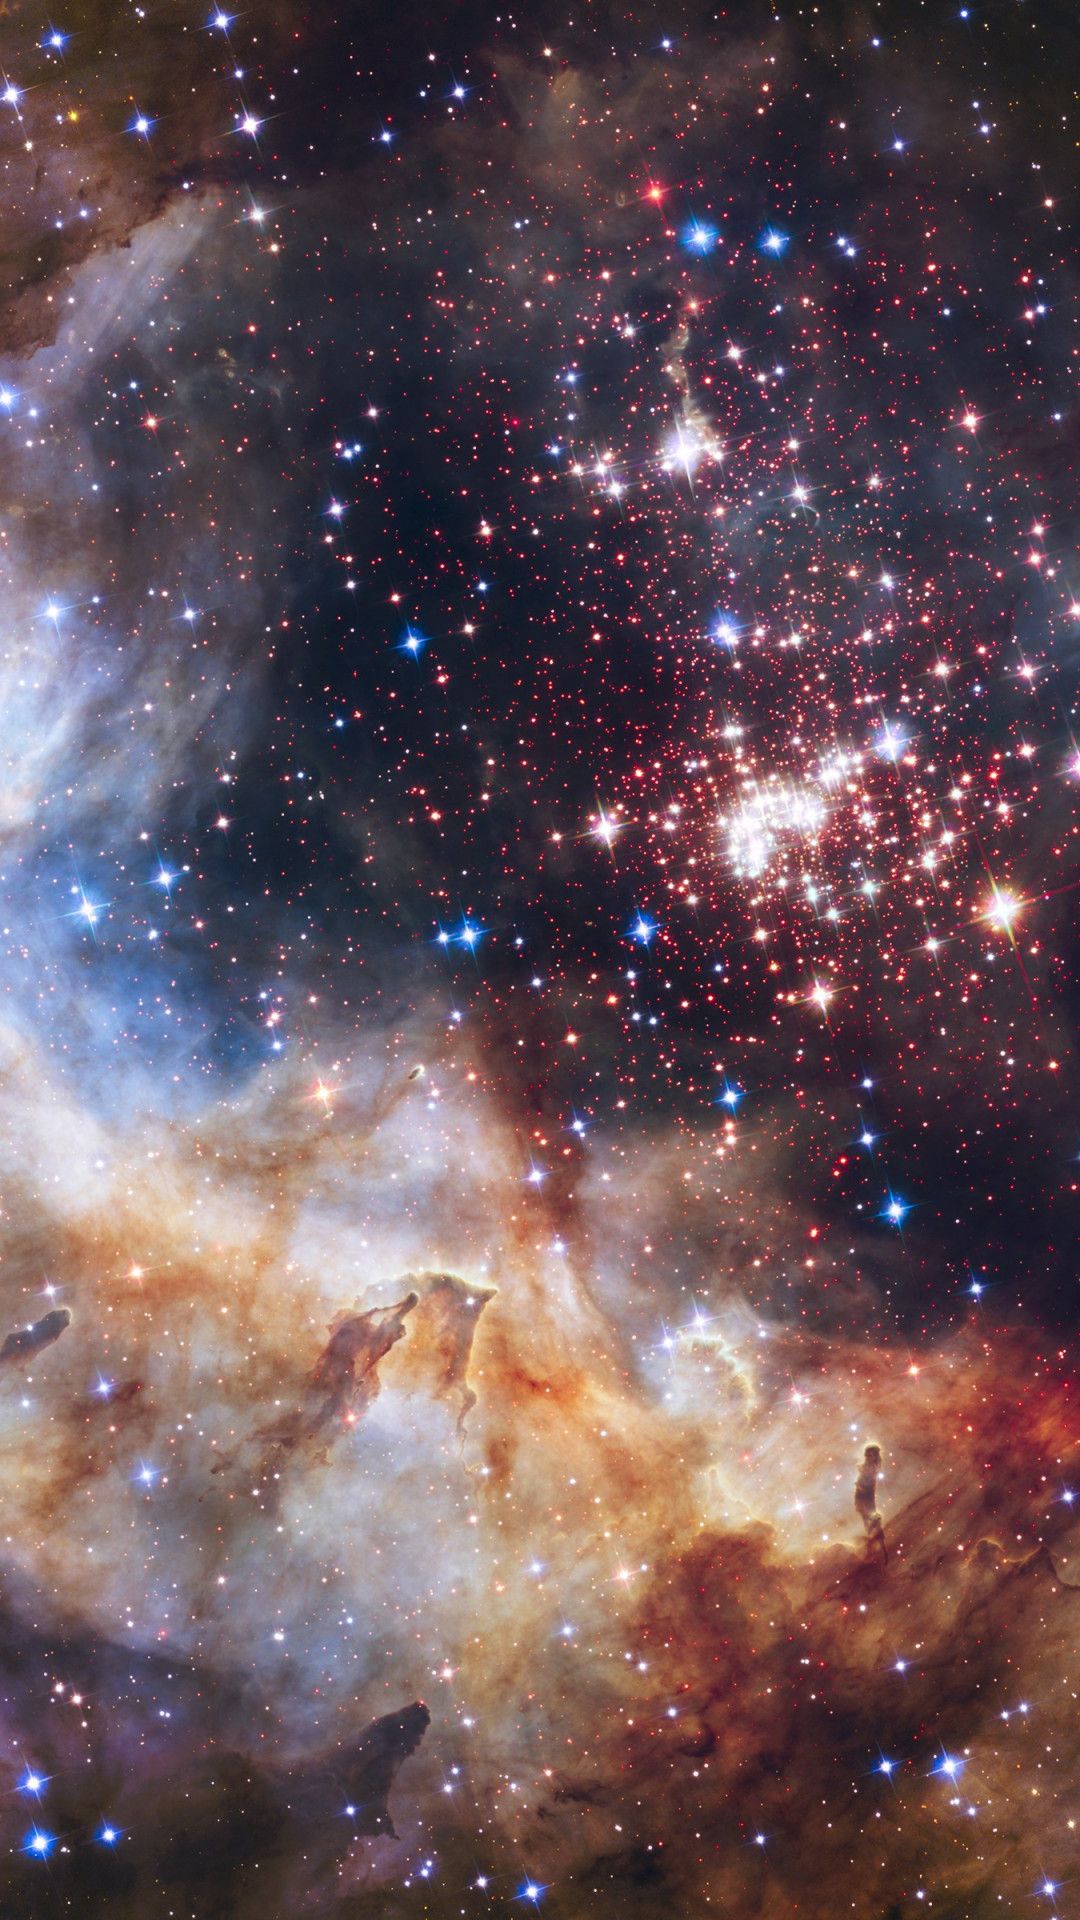 Download wallpaper: Universe seen through Hubble Space Telescope 1080x1920